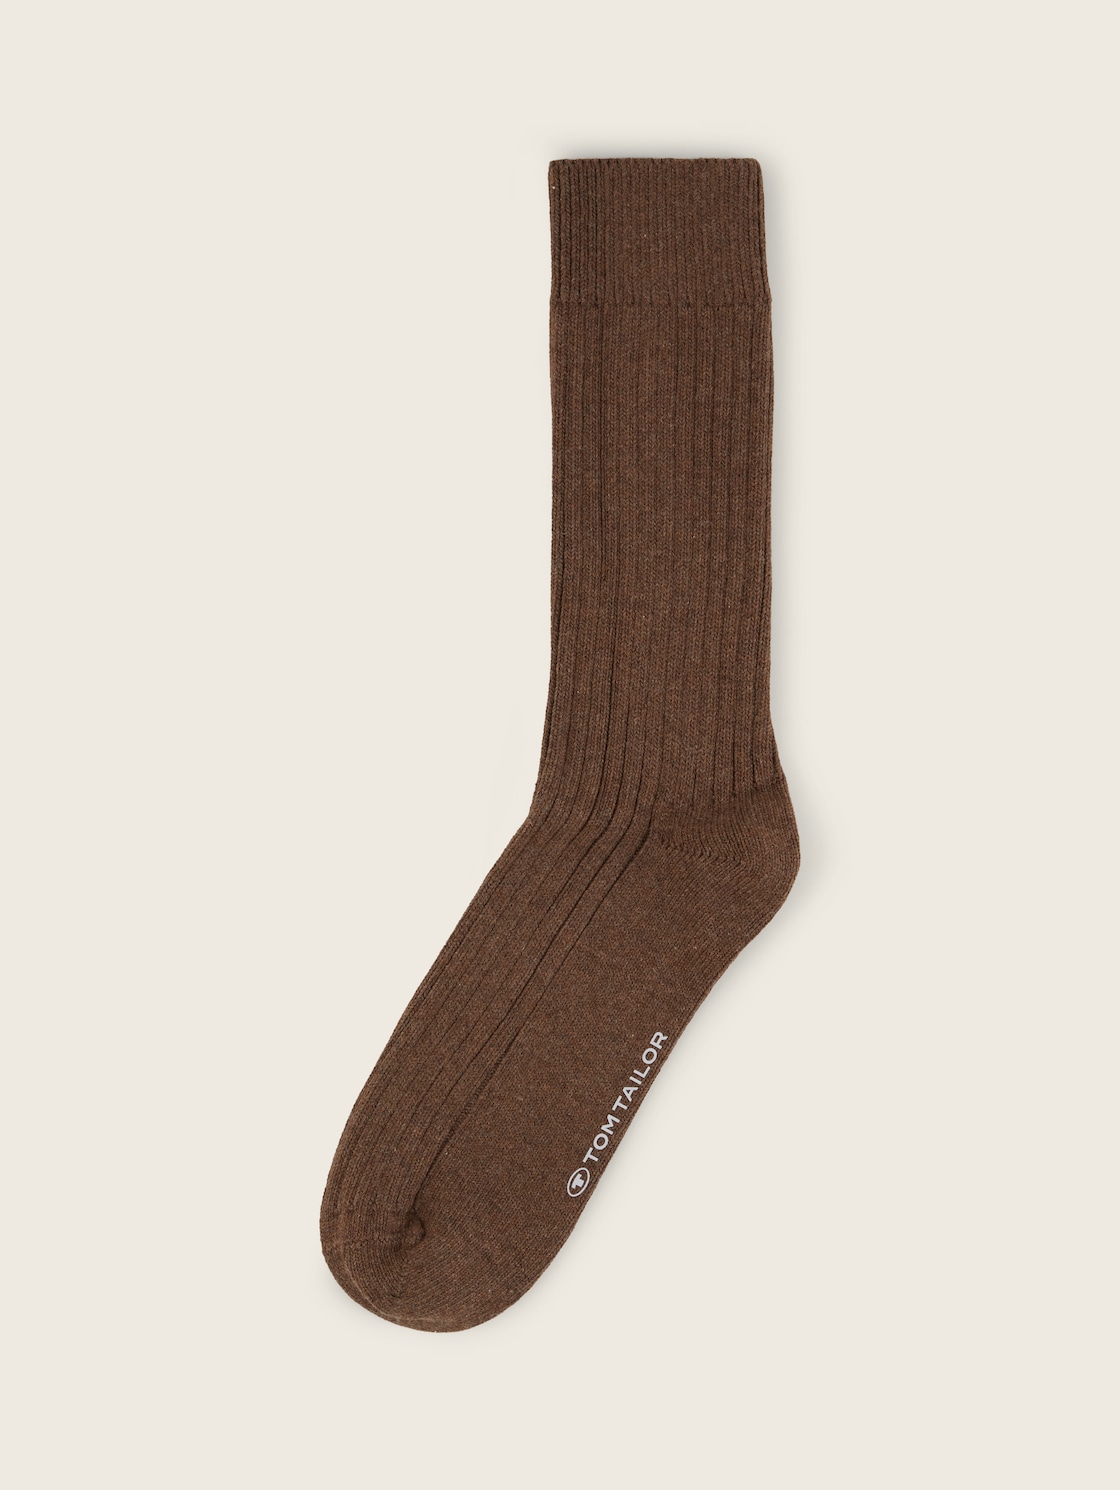 TOM TAILOR Herren Basic Socken, braun, Uni, Gr. 39-42 von Tom Tailor